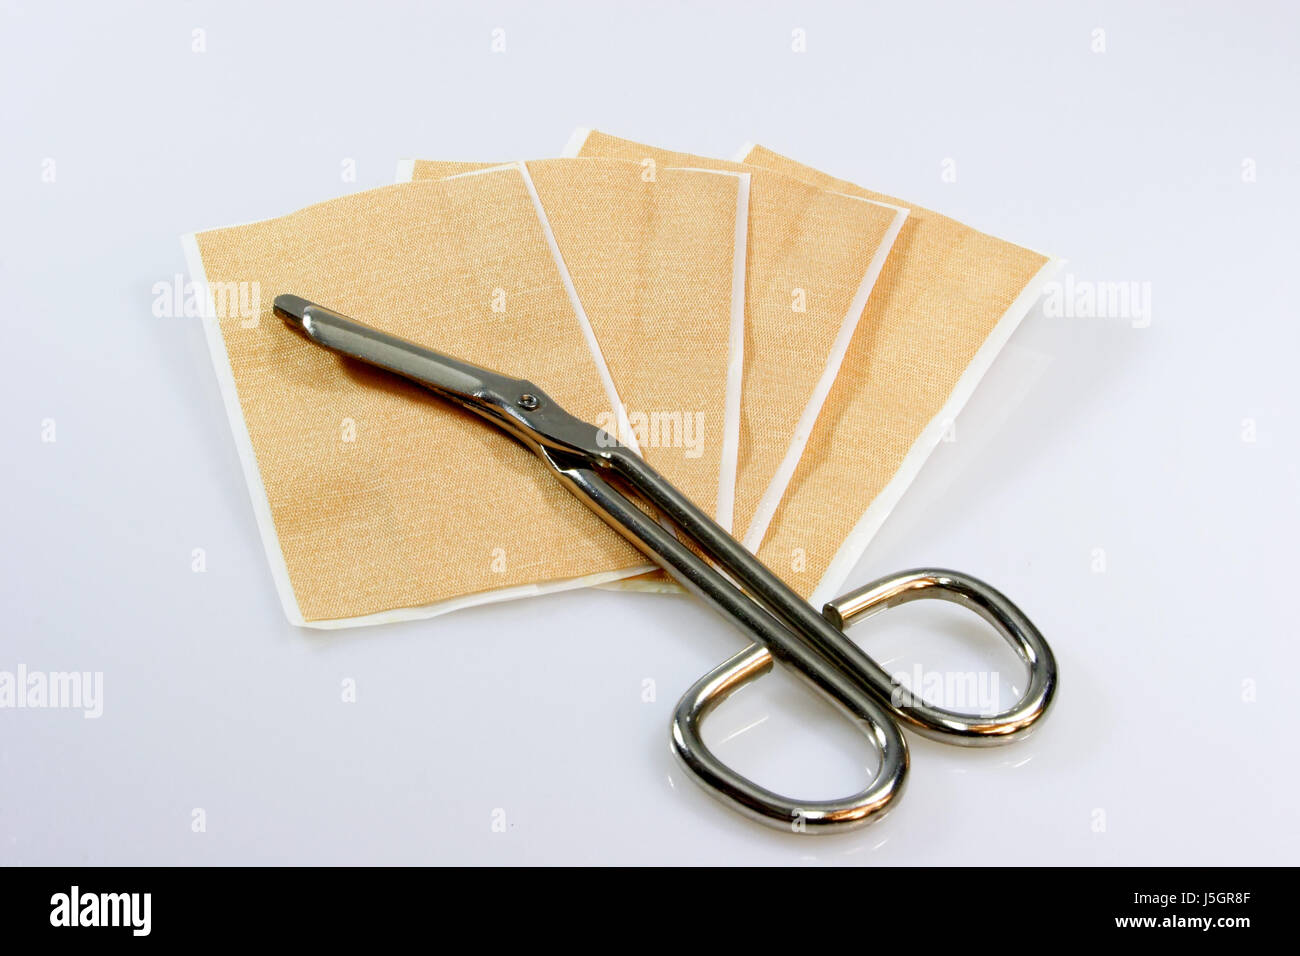 plaster wound injury scissors scissor means agent medicine drug remedy Stock Photo